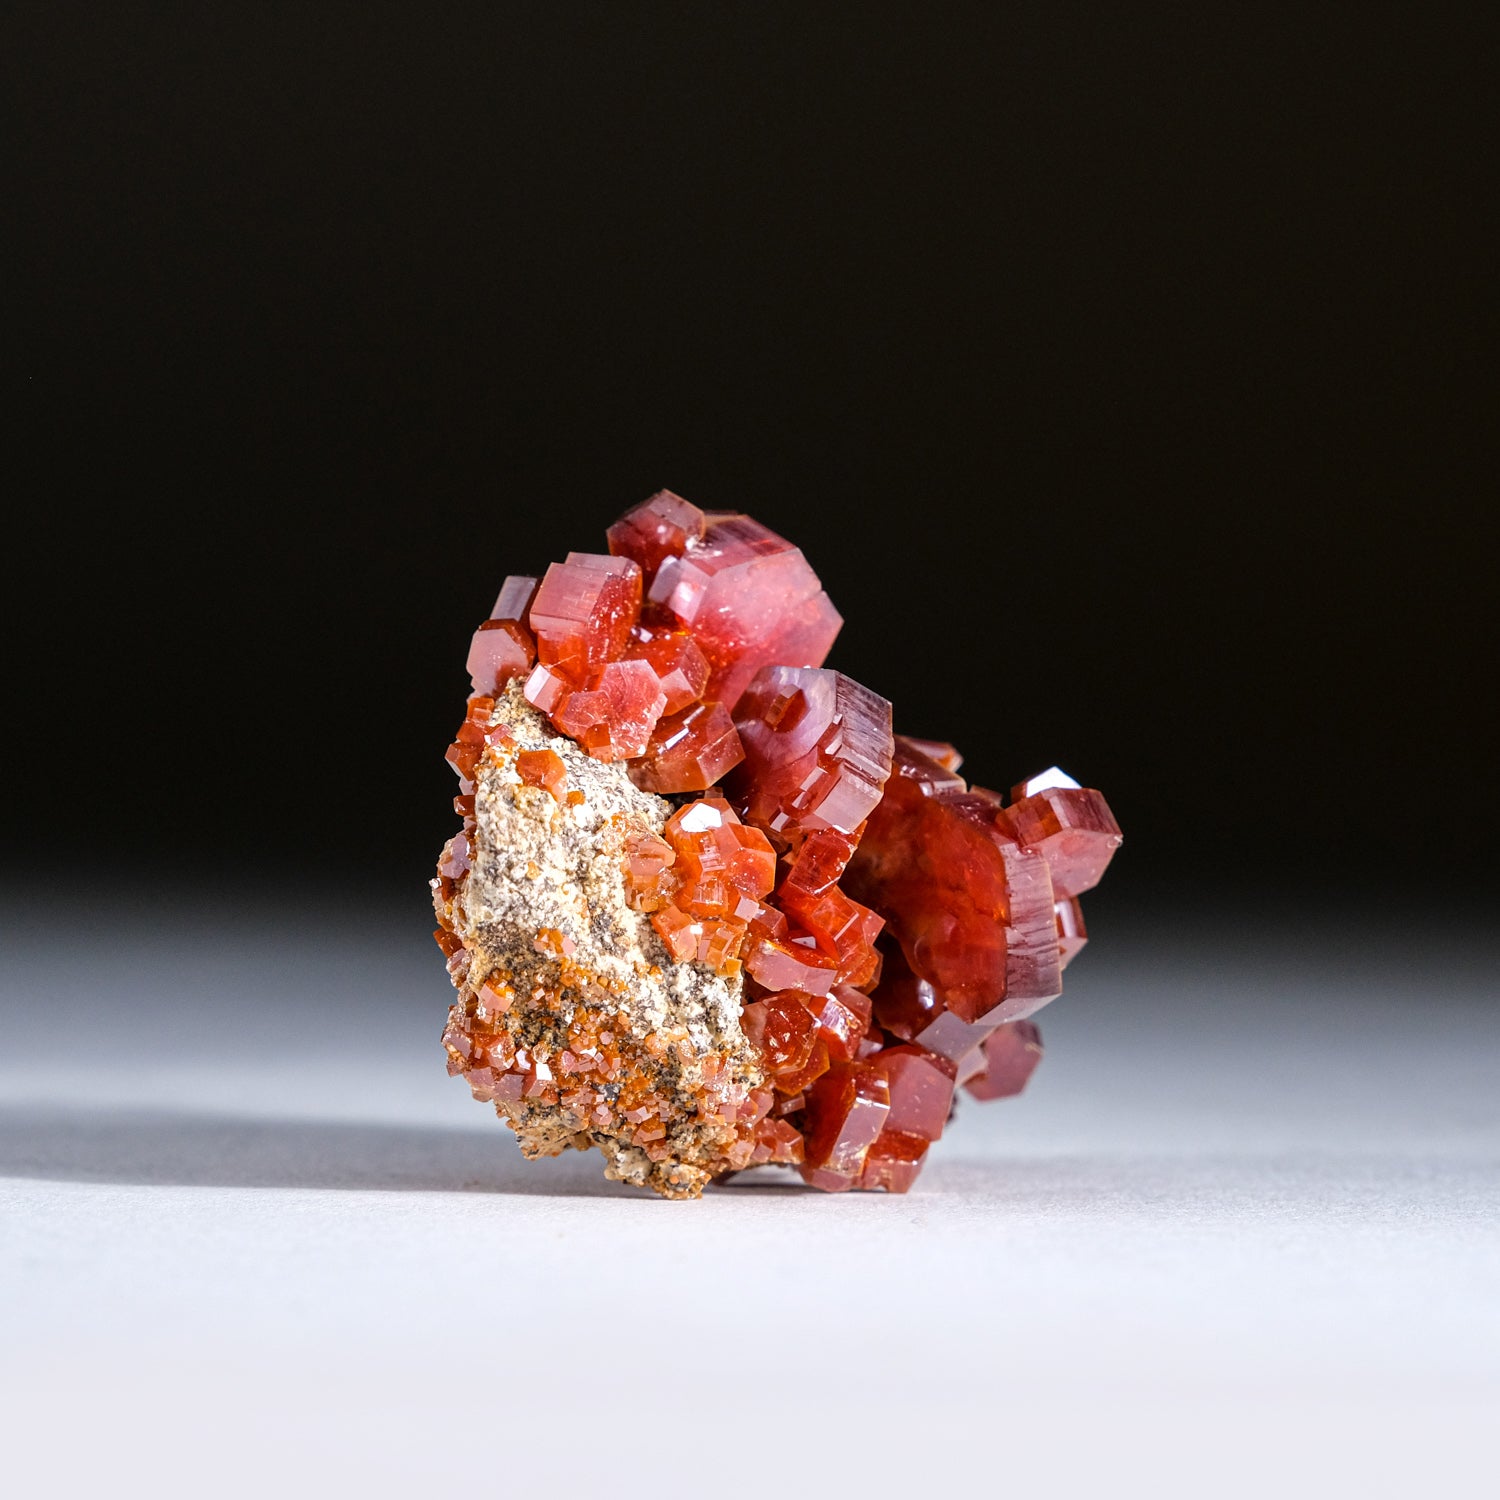 Genuine Vanadinite Crystal Cluster on Matrix from Morocco (63.3 grams)